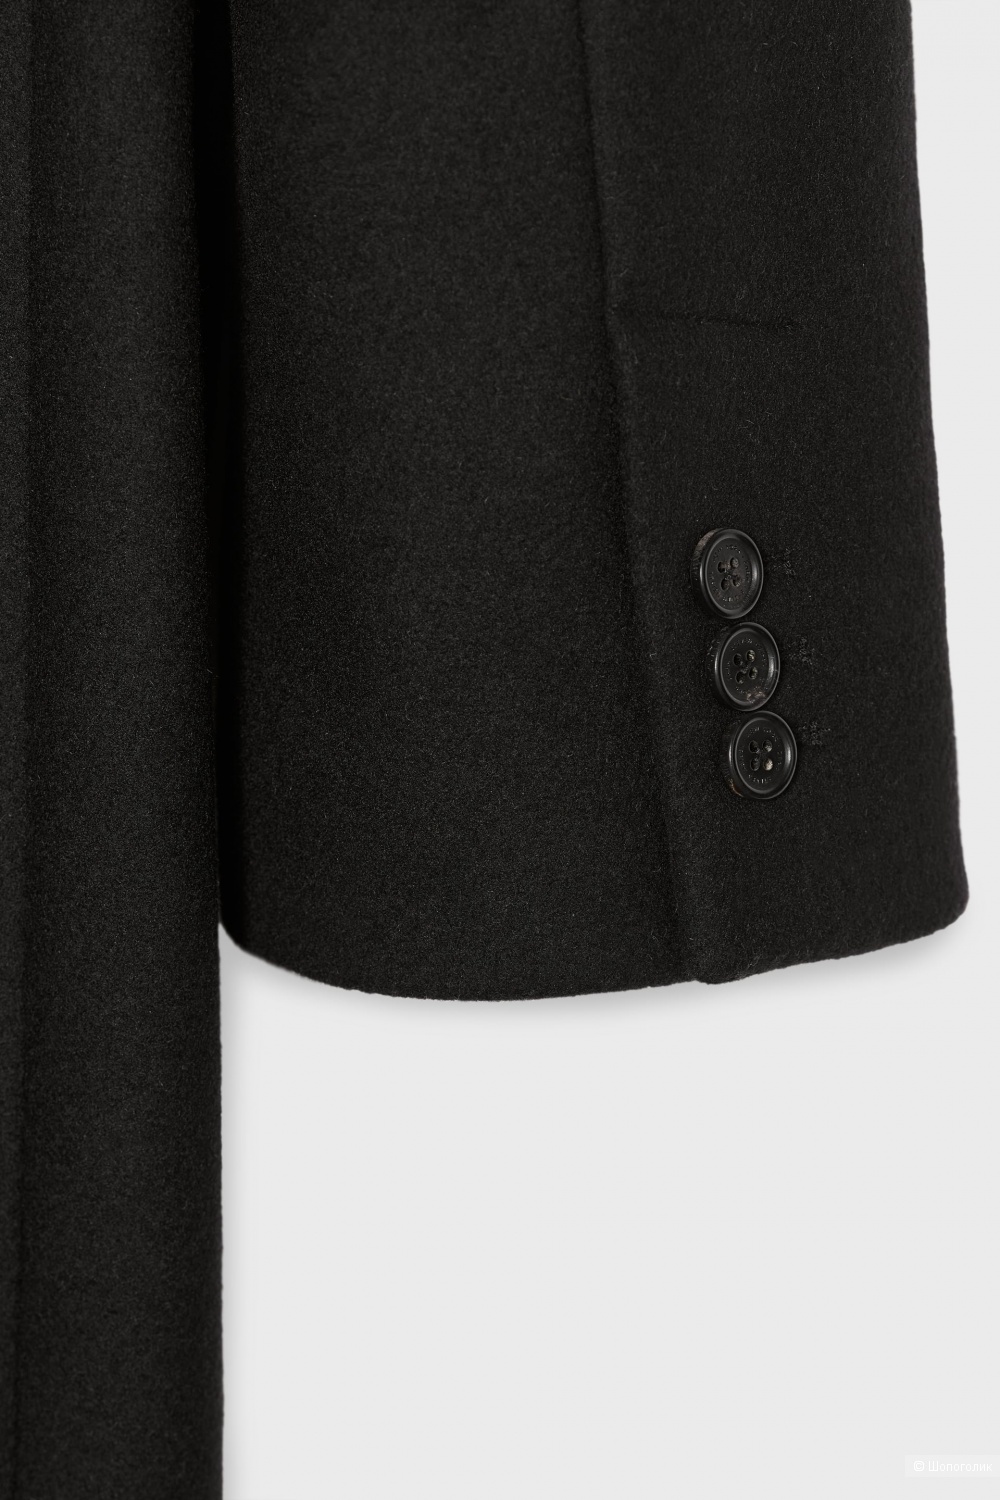 Пальто Steven Meisel x Zara, размер  XS/S/M